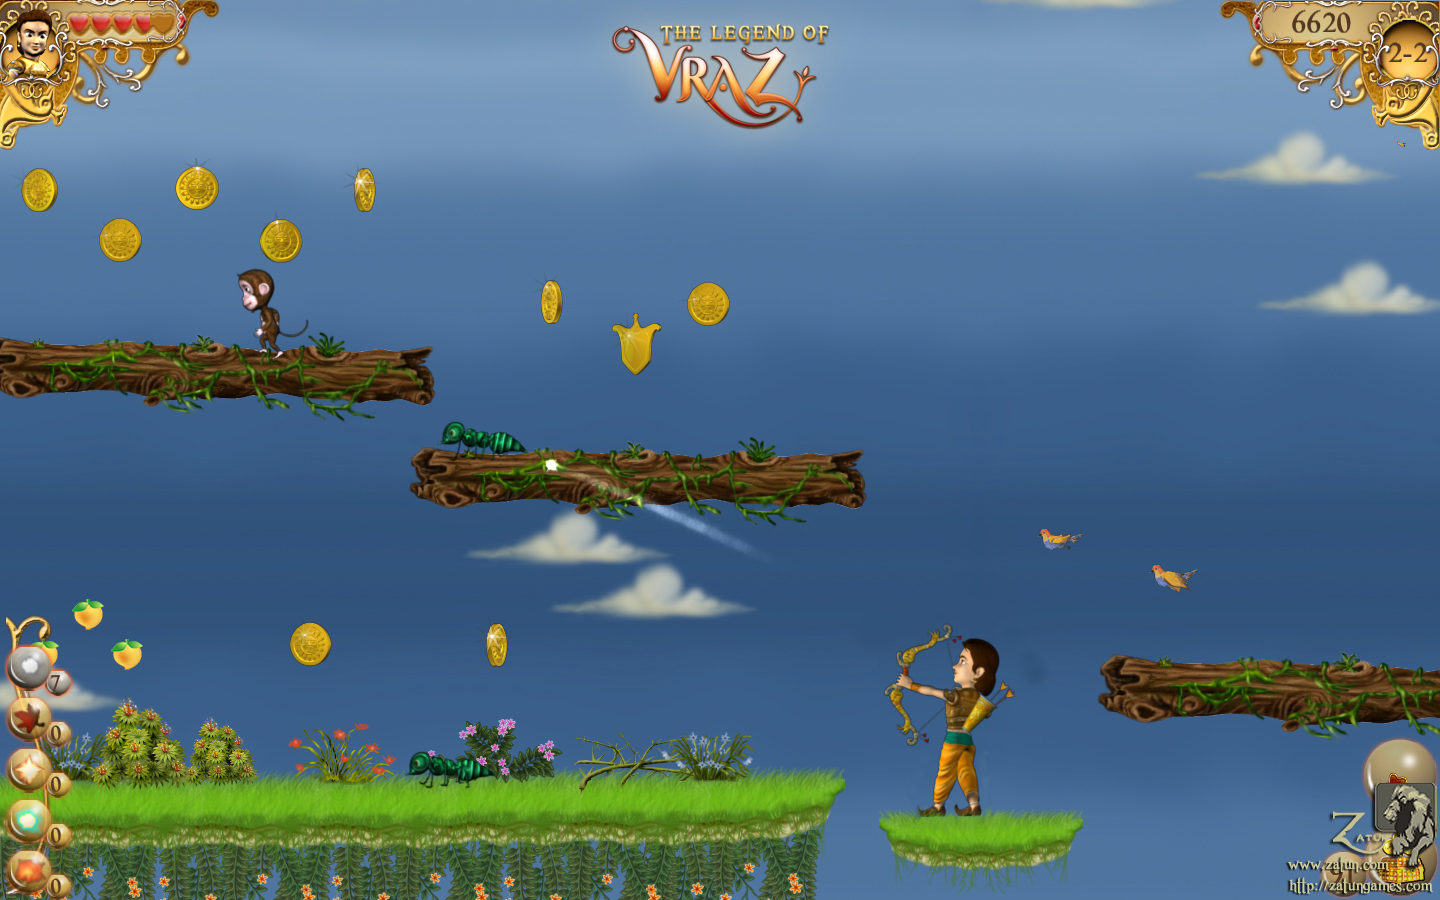 LegendofVraz03 - Indian Games for Kids on Steam